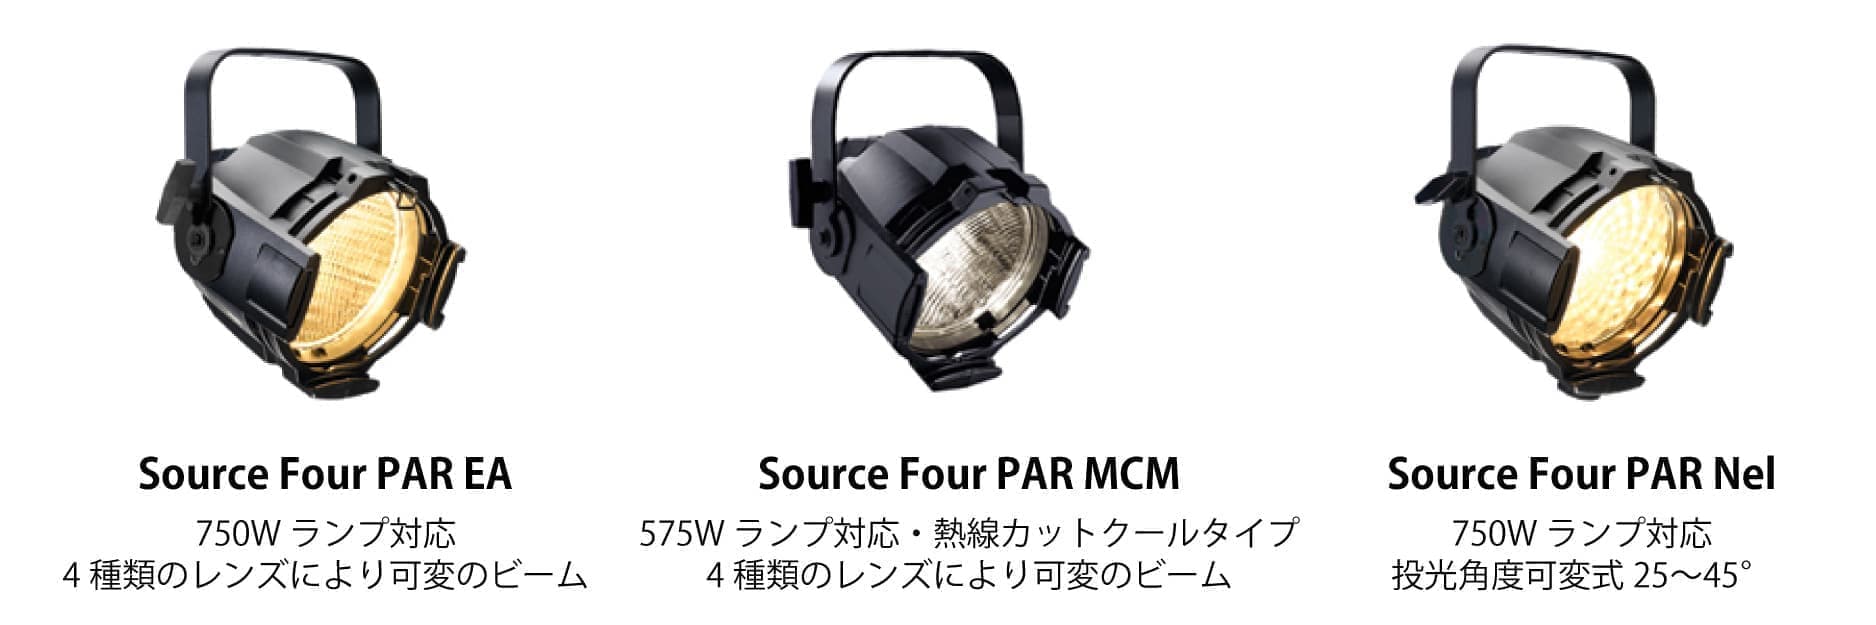 SourceFour_PAR│株式会社剣プロダクションサービス